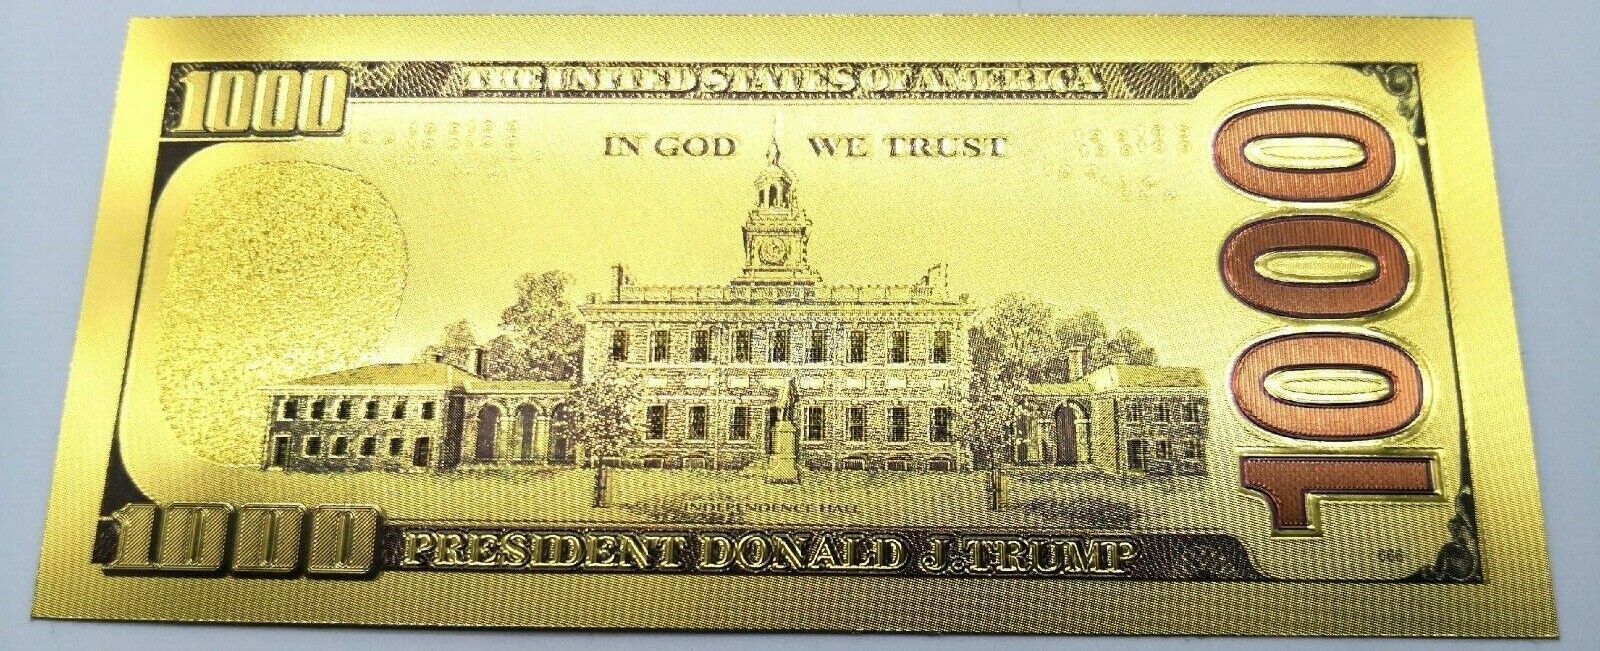 50 PCS President Donald Trump $1000 Gold-Plated Collectible Money Novelty US Без бренда - фотография #4